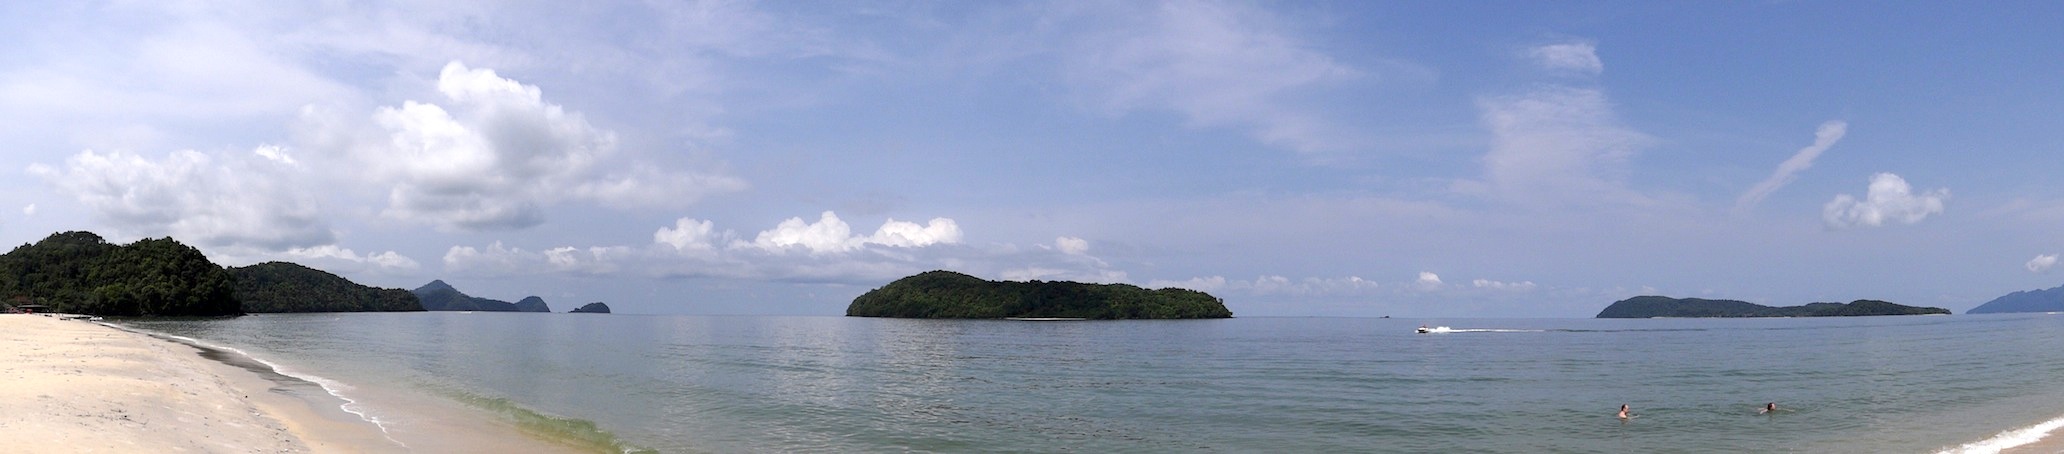 01 Sea view Lanai Beach Resort